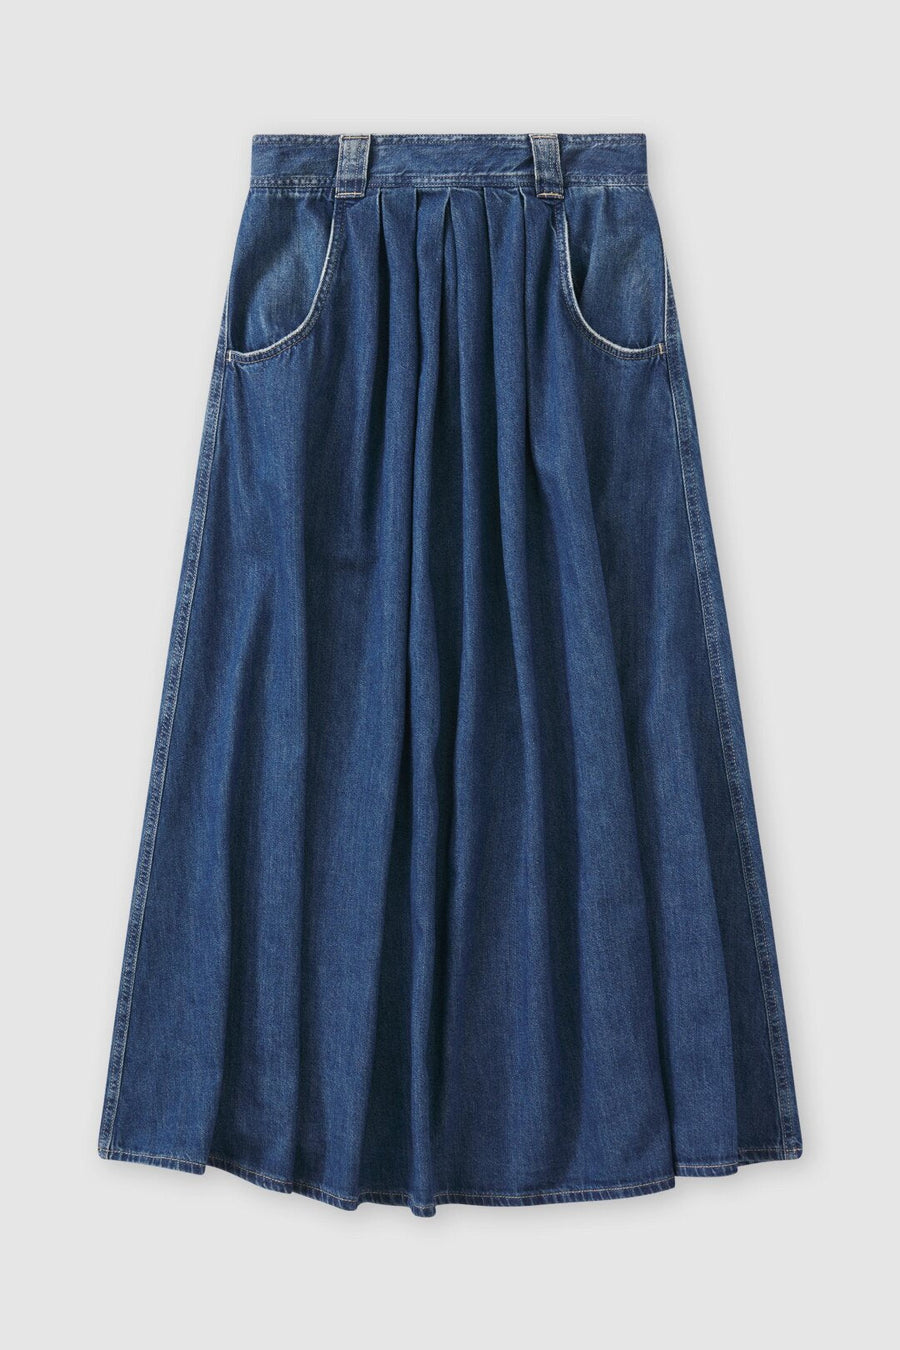 Skirt Long Pleated Skir C93239-19p-2a Dark-Blue